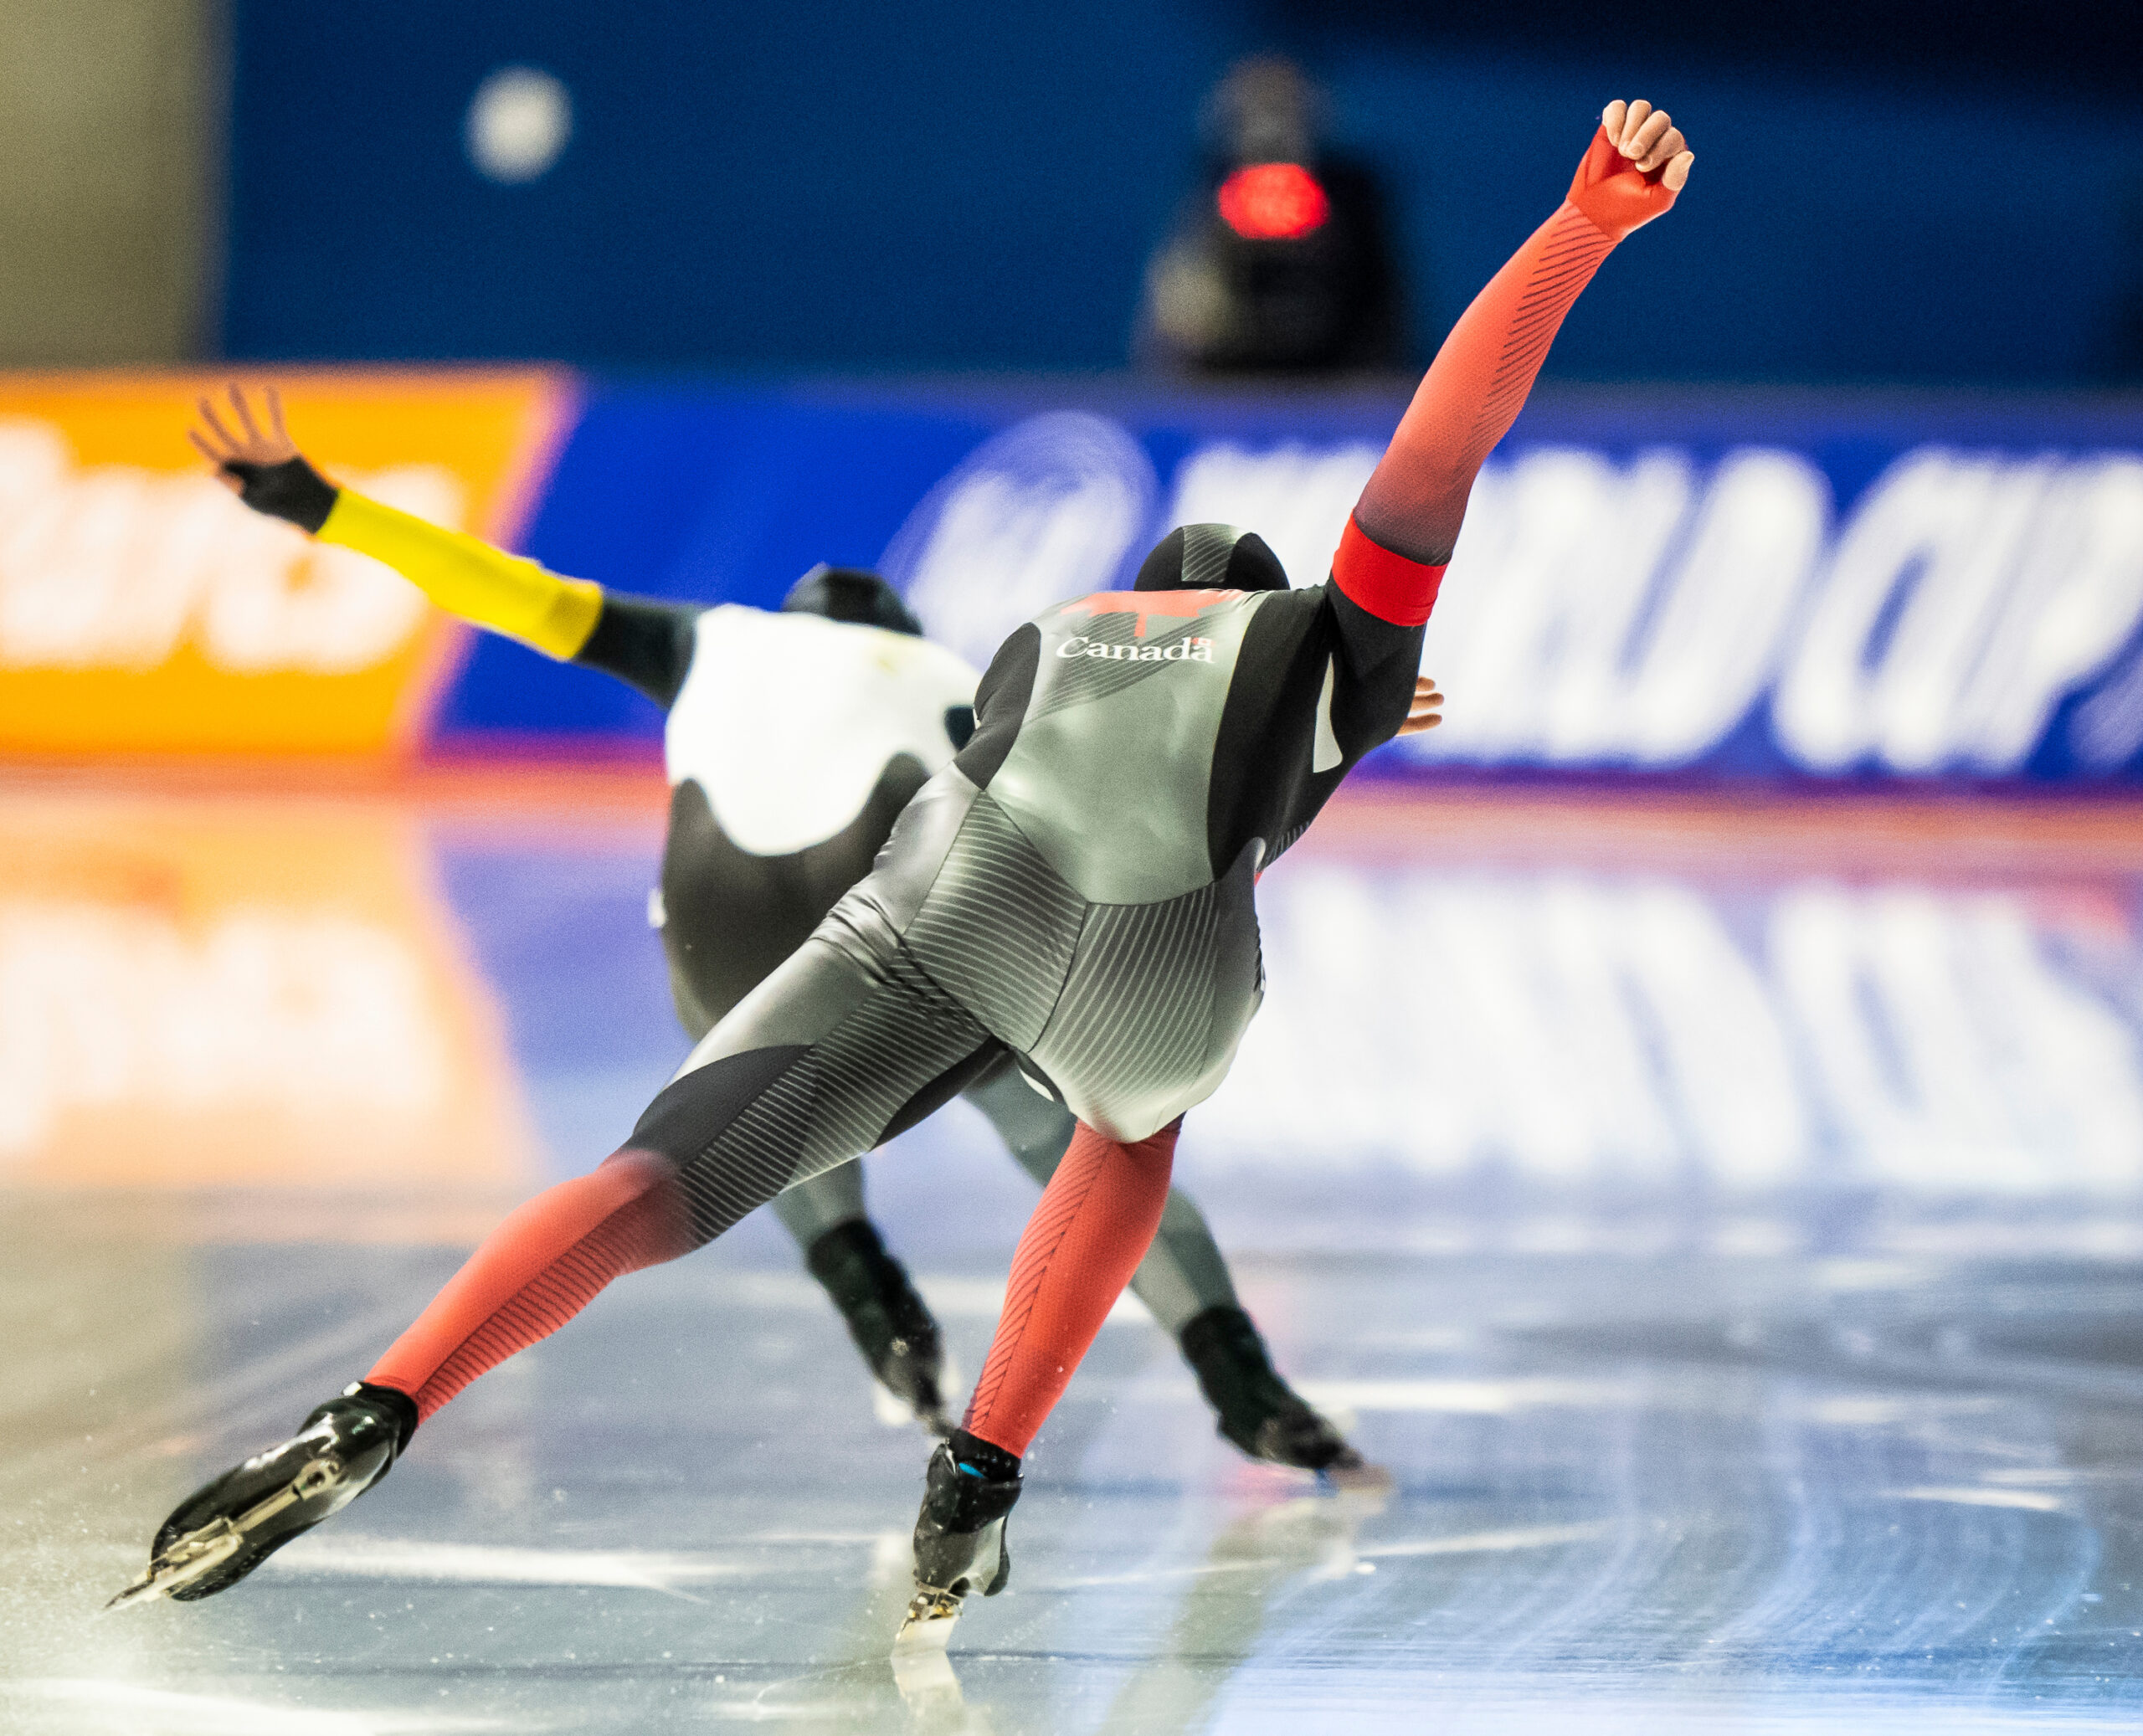 2022 23 ISU World Cup Speed Skating 5 Speed Skating Canada